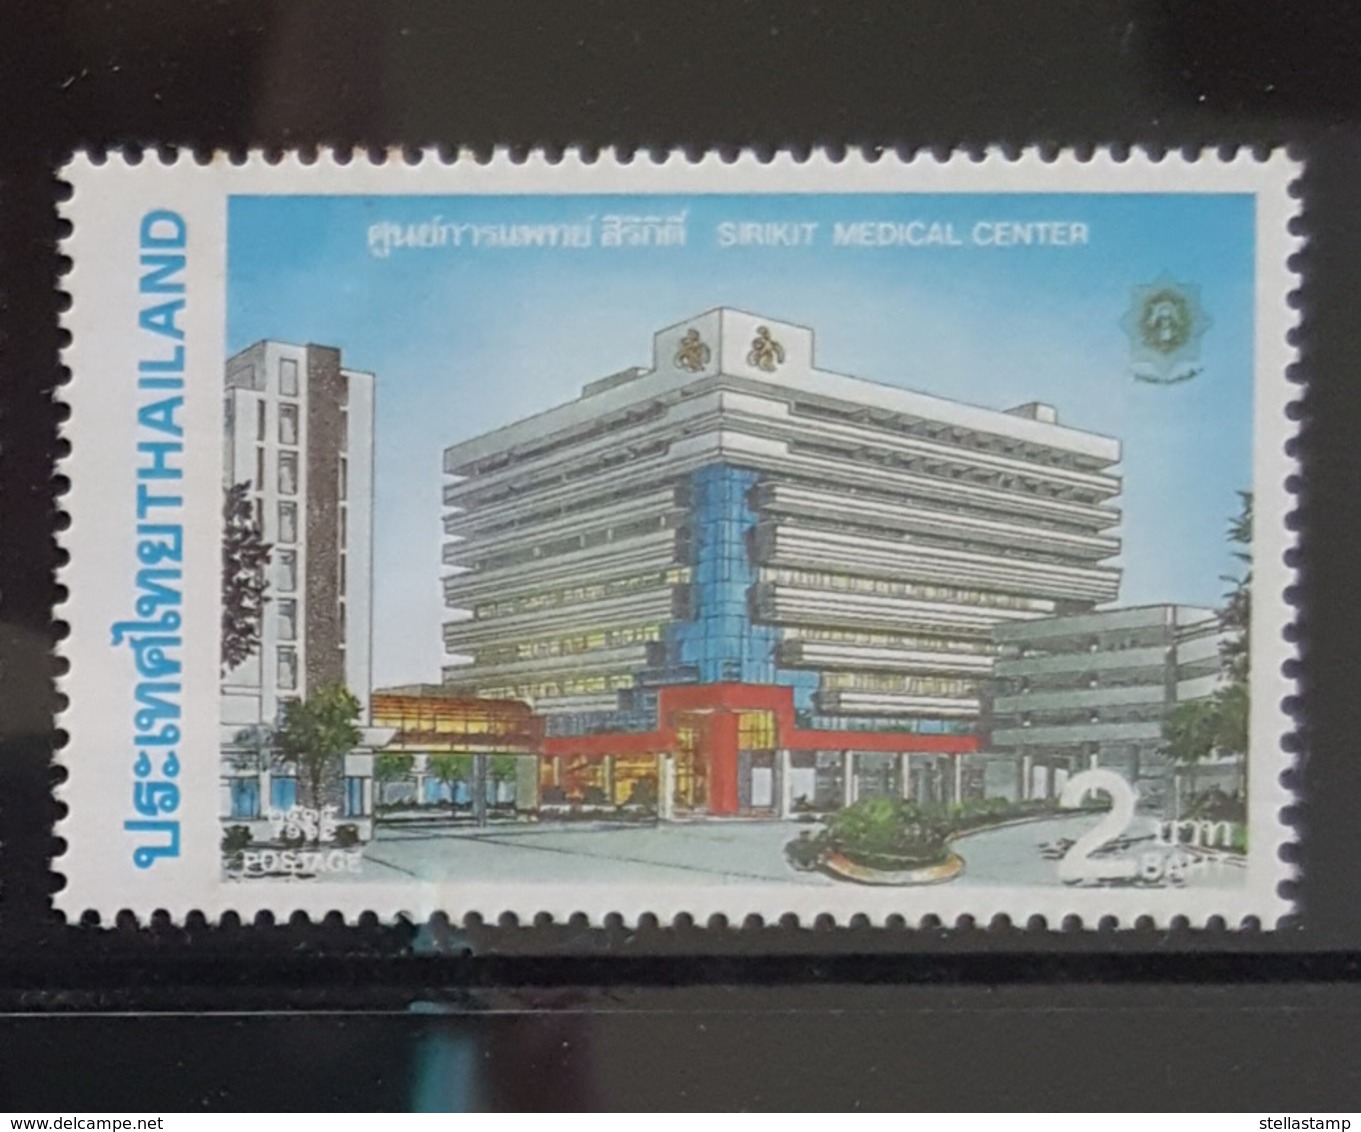 Thailand Stamp 1992 Inauguration Of Sirikit Medical Center - Thailand